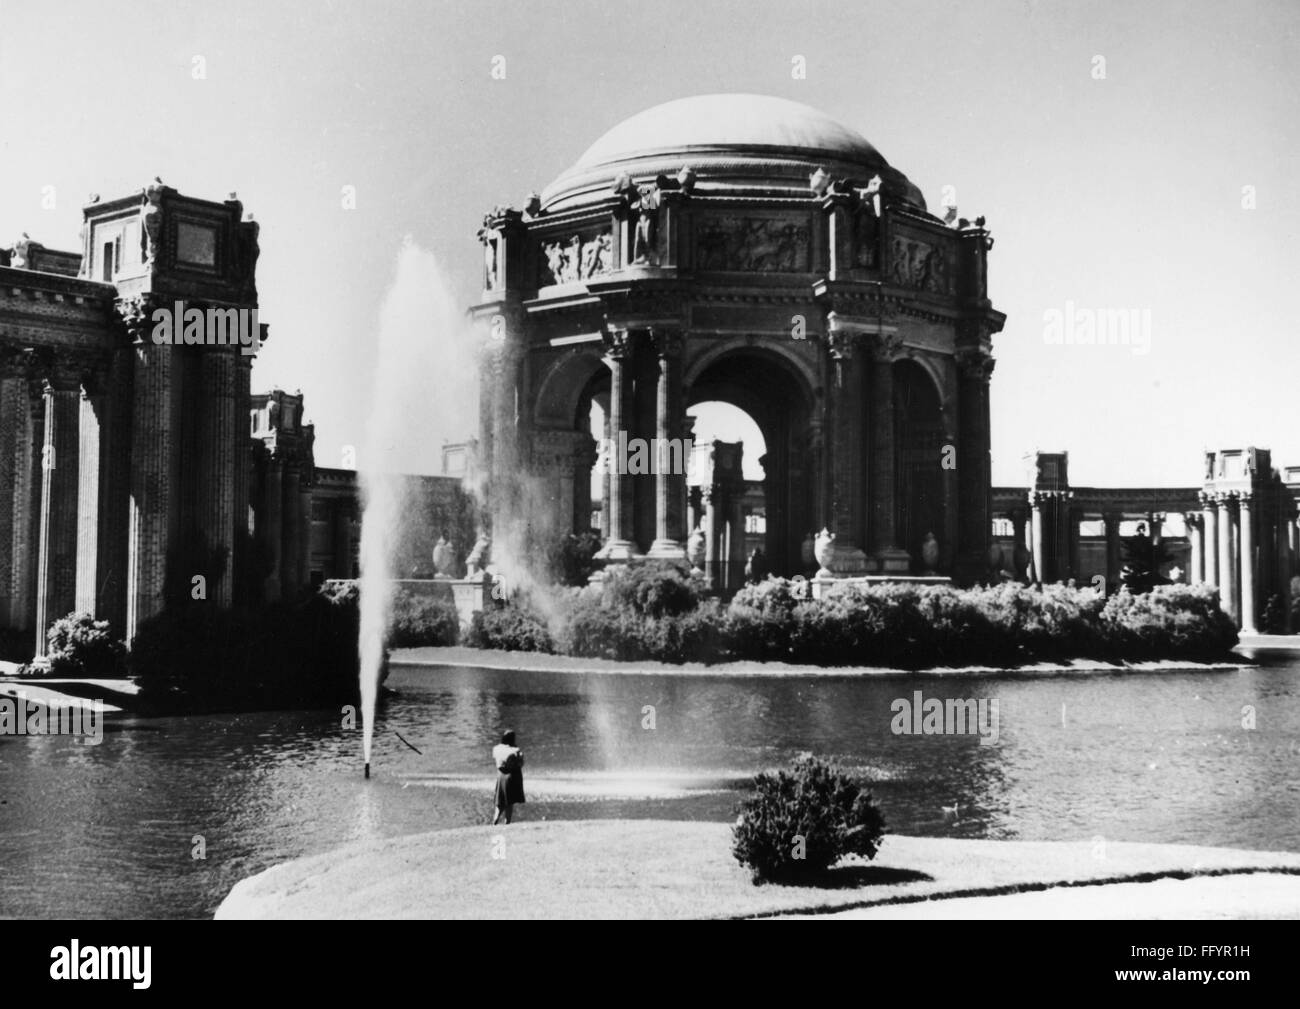 PANAMA-PACIFIC EXPOSITION. /nThe Palast der schönen Künste an der Panama-Pacific Exposition in San Francisco, Kalifornien. Fotografie, 1915. Stockfoto